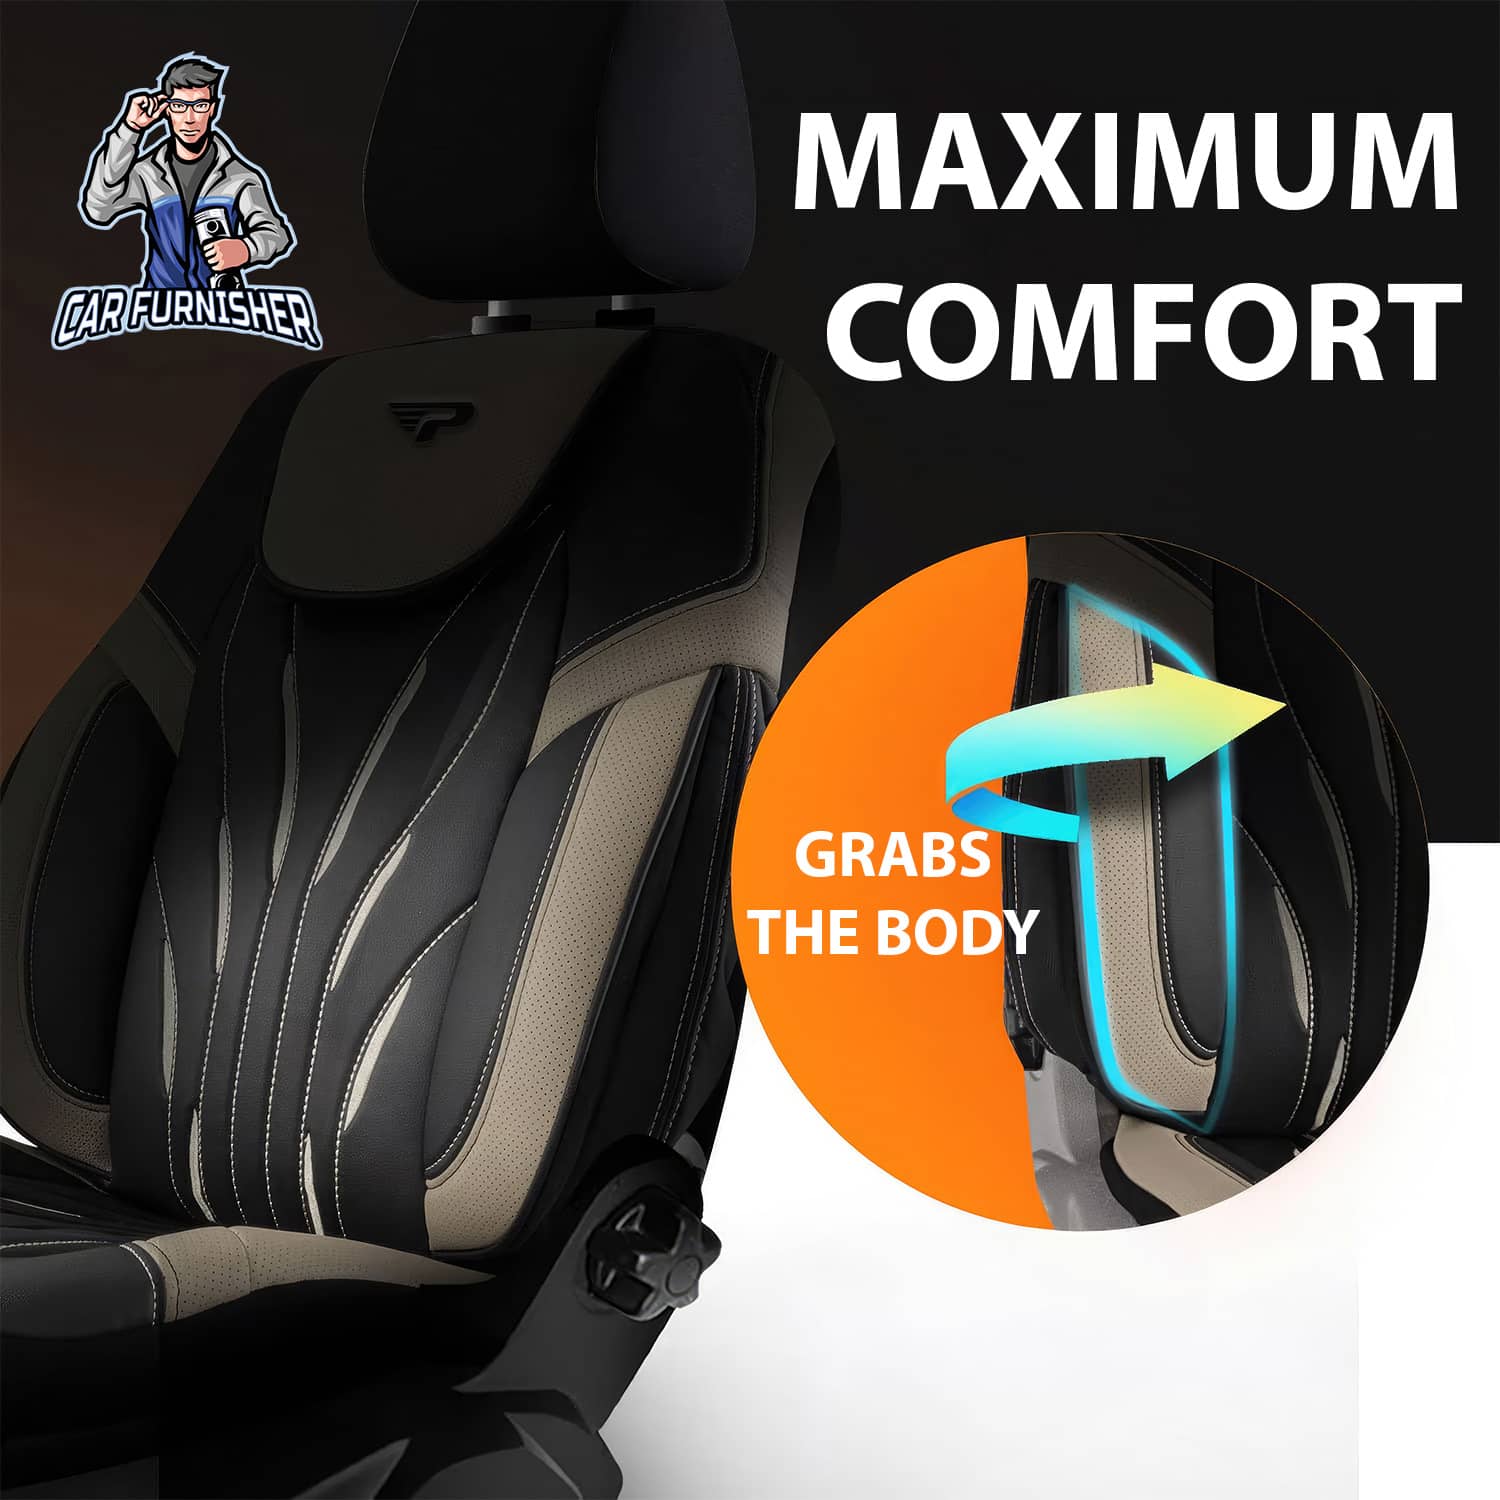 Car Seat Cover Set - Pars Design Beige 5 Seats + Headrests (Full Set) Full Leather